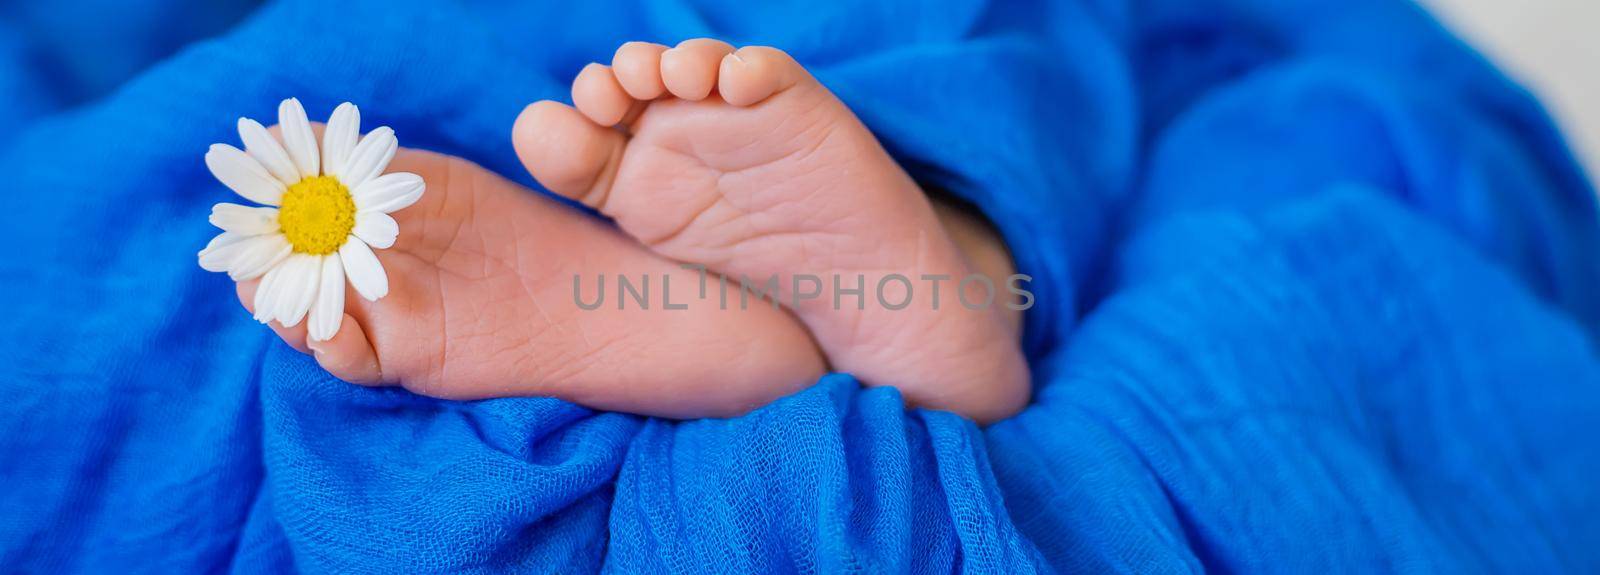 Newborn baby sleeping on a blue background. Selective focus. by yanadjana